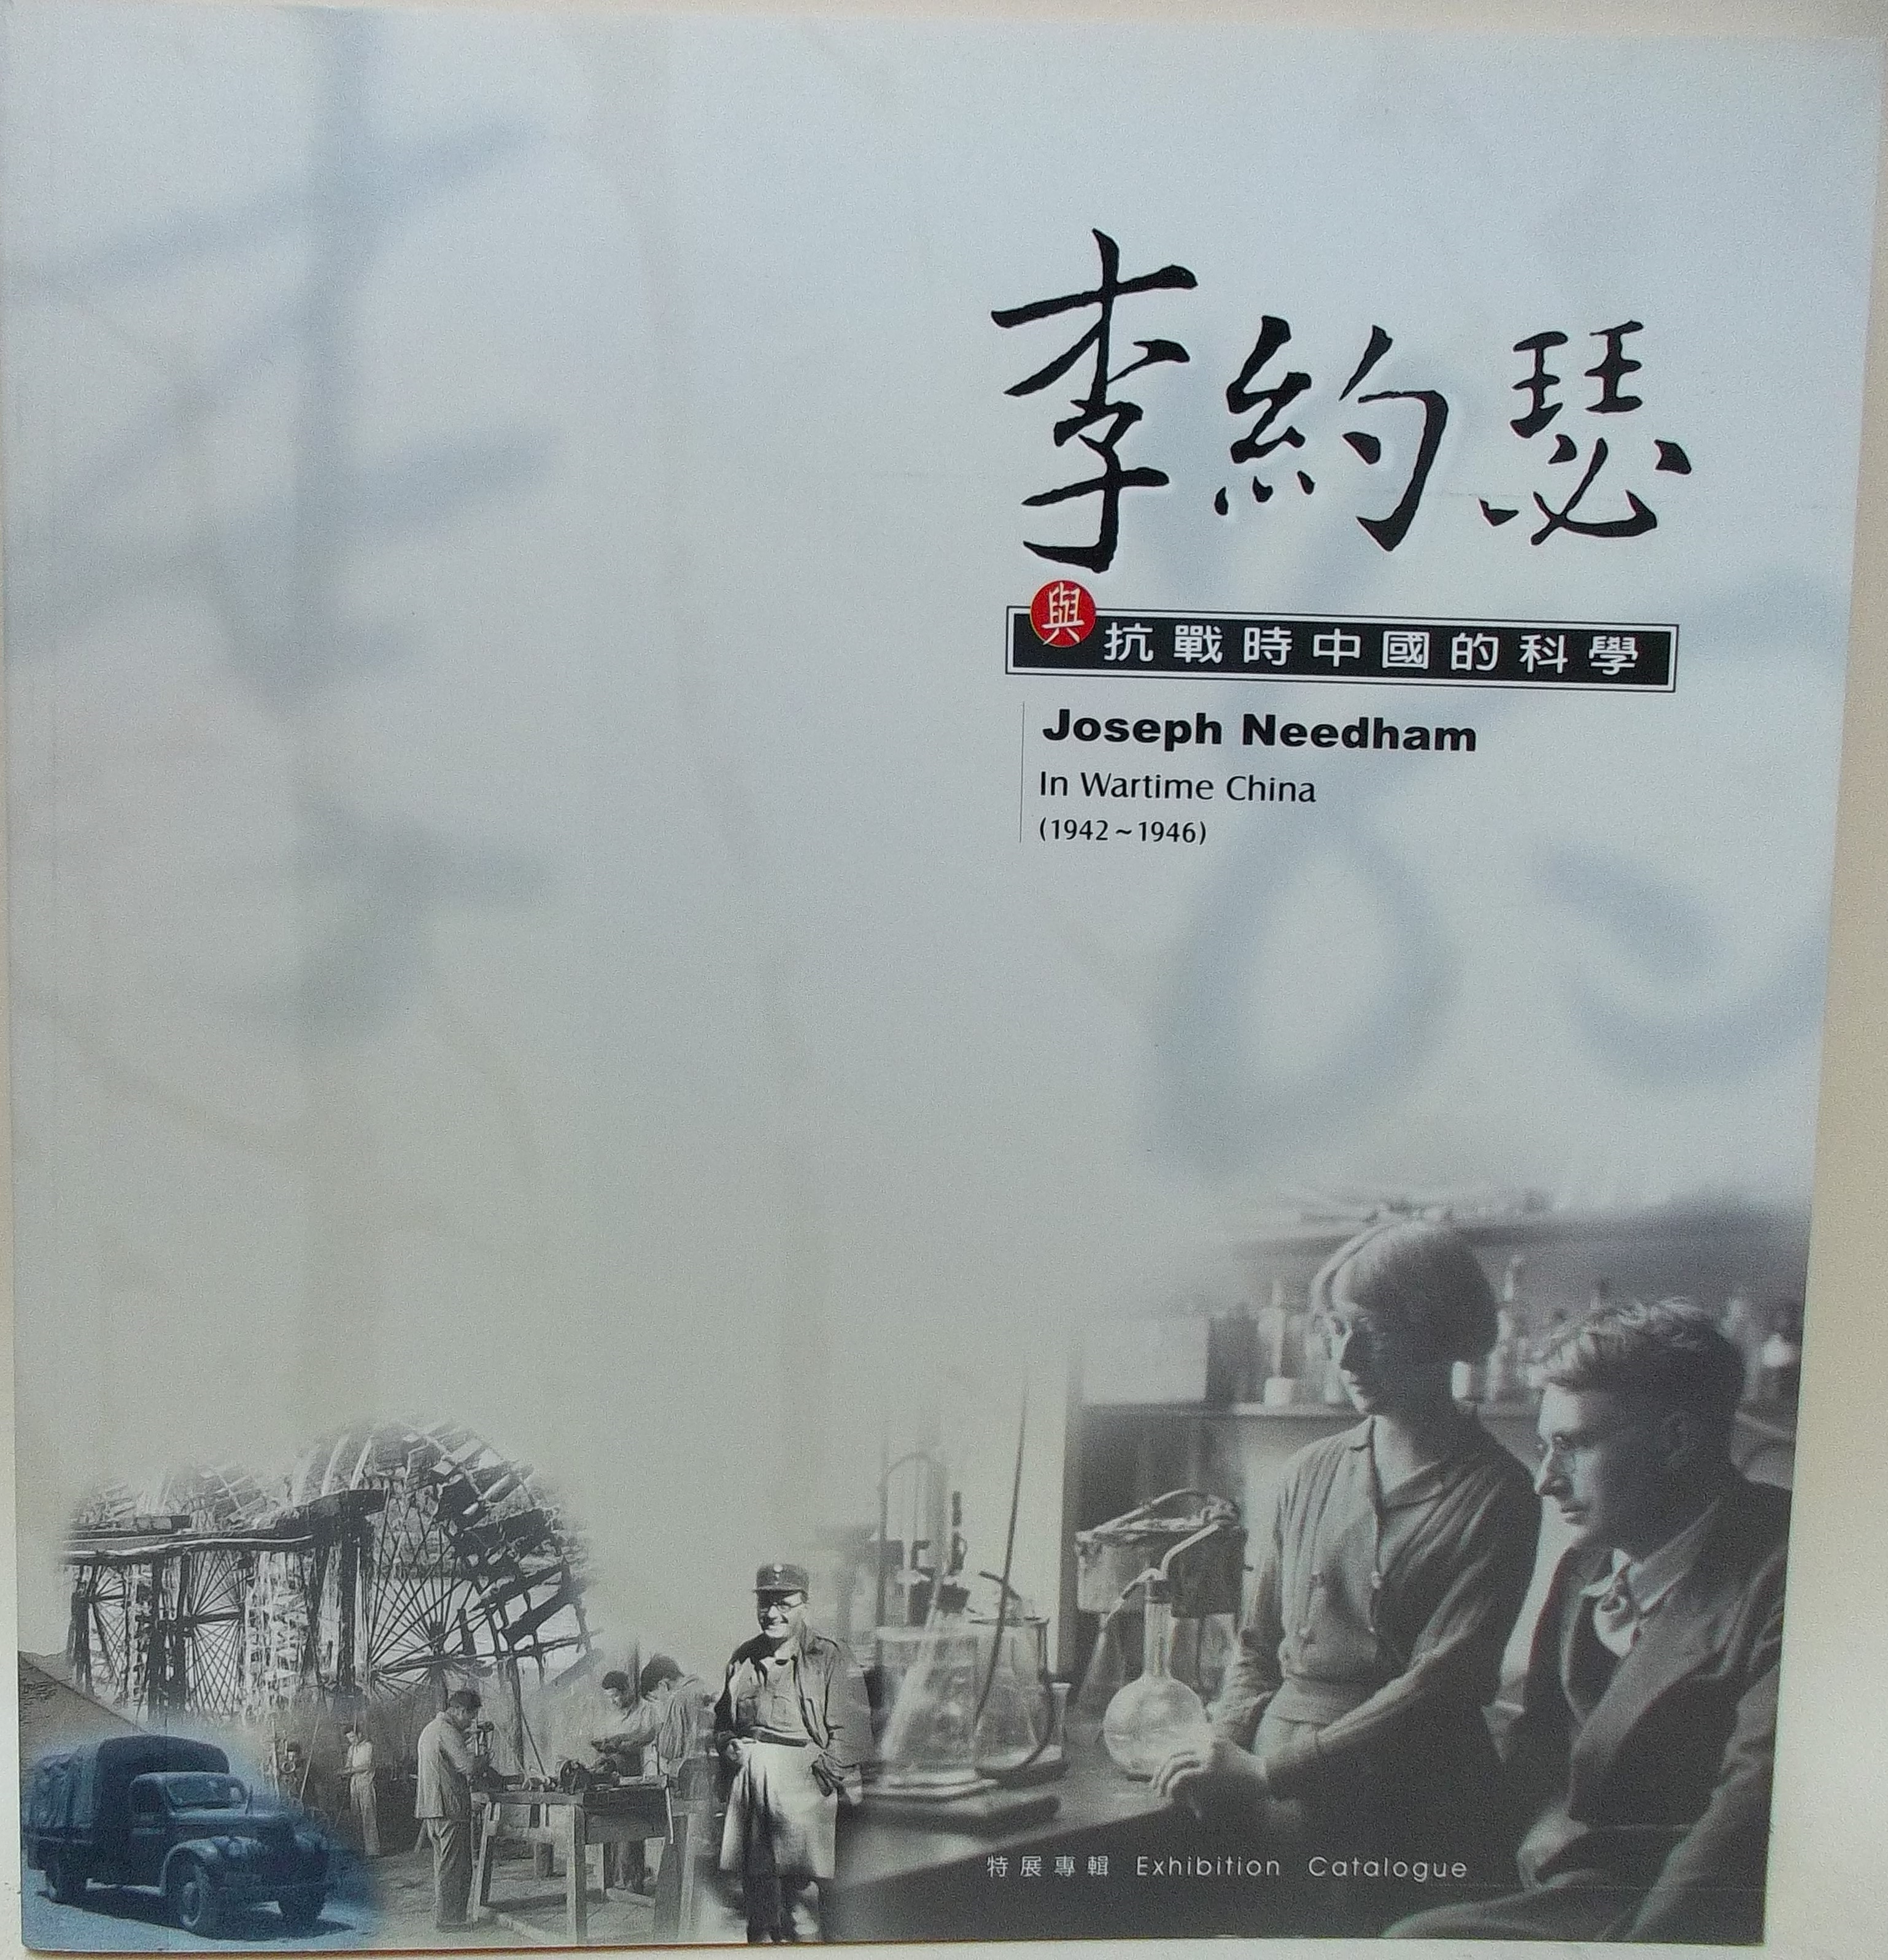 Joseph Needham in Wartime China (1942-1946) Exhibition Catalogue